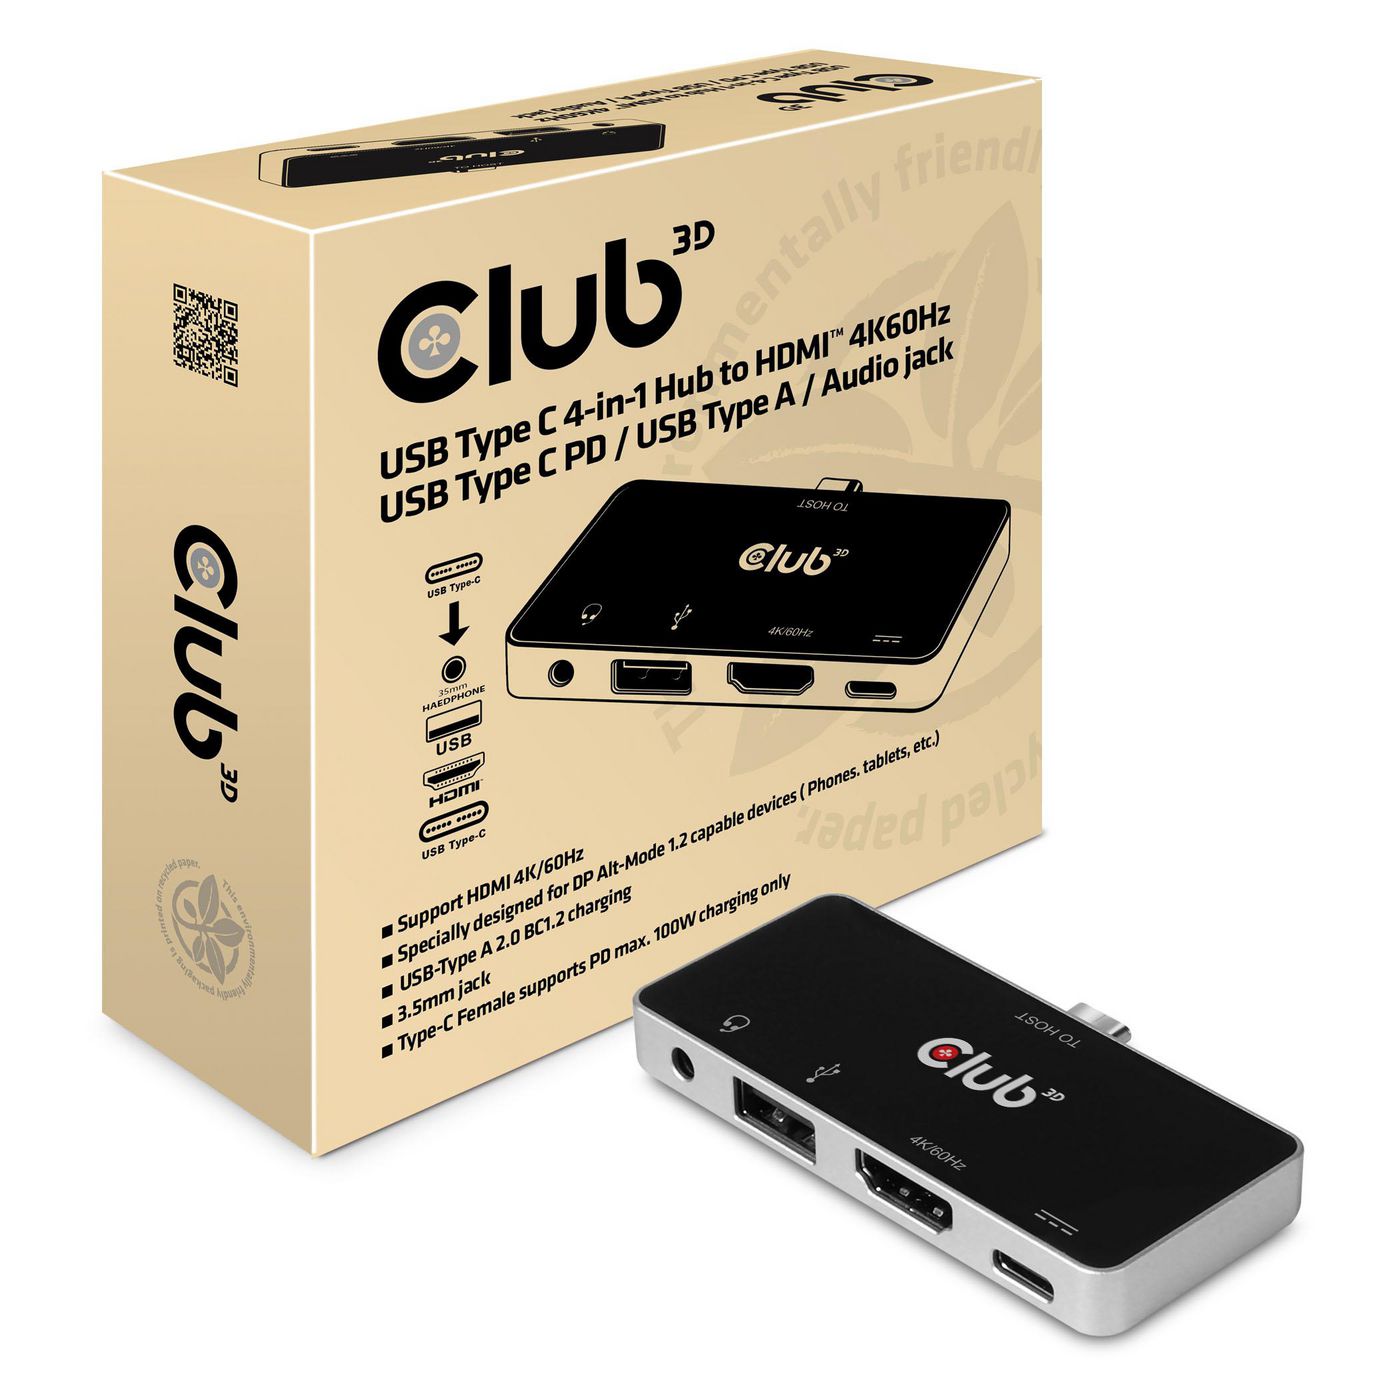 Club3D CSV-1591 W128559563 Usb Type C 4-In-1 Hub To 